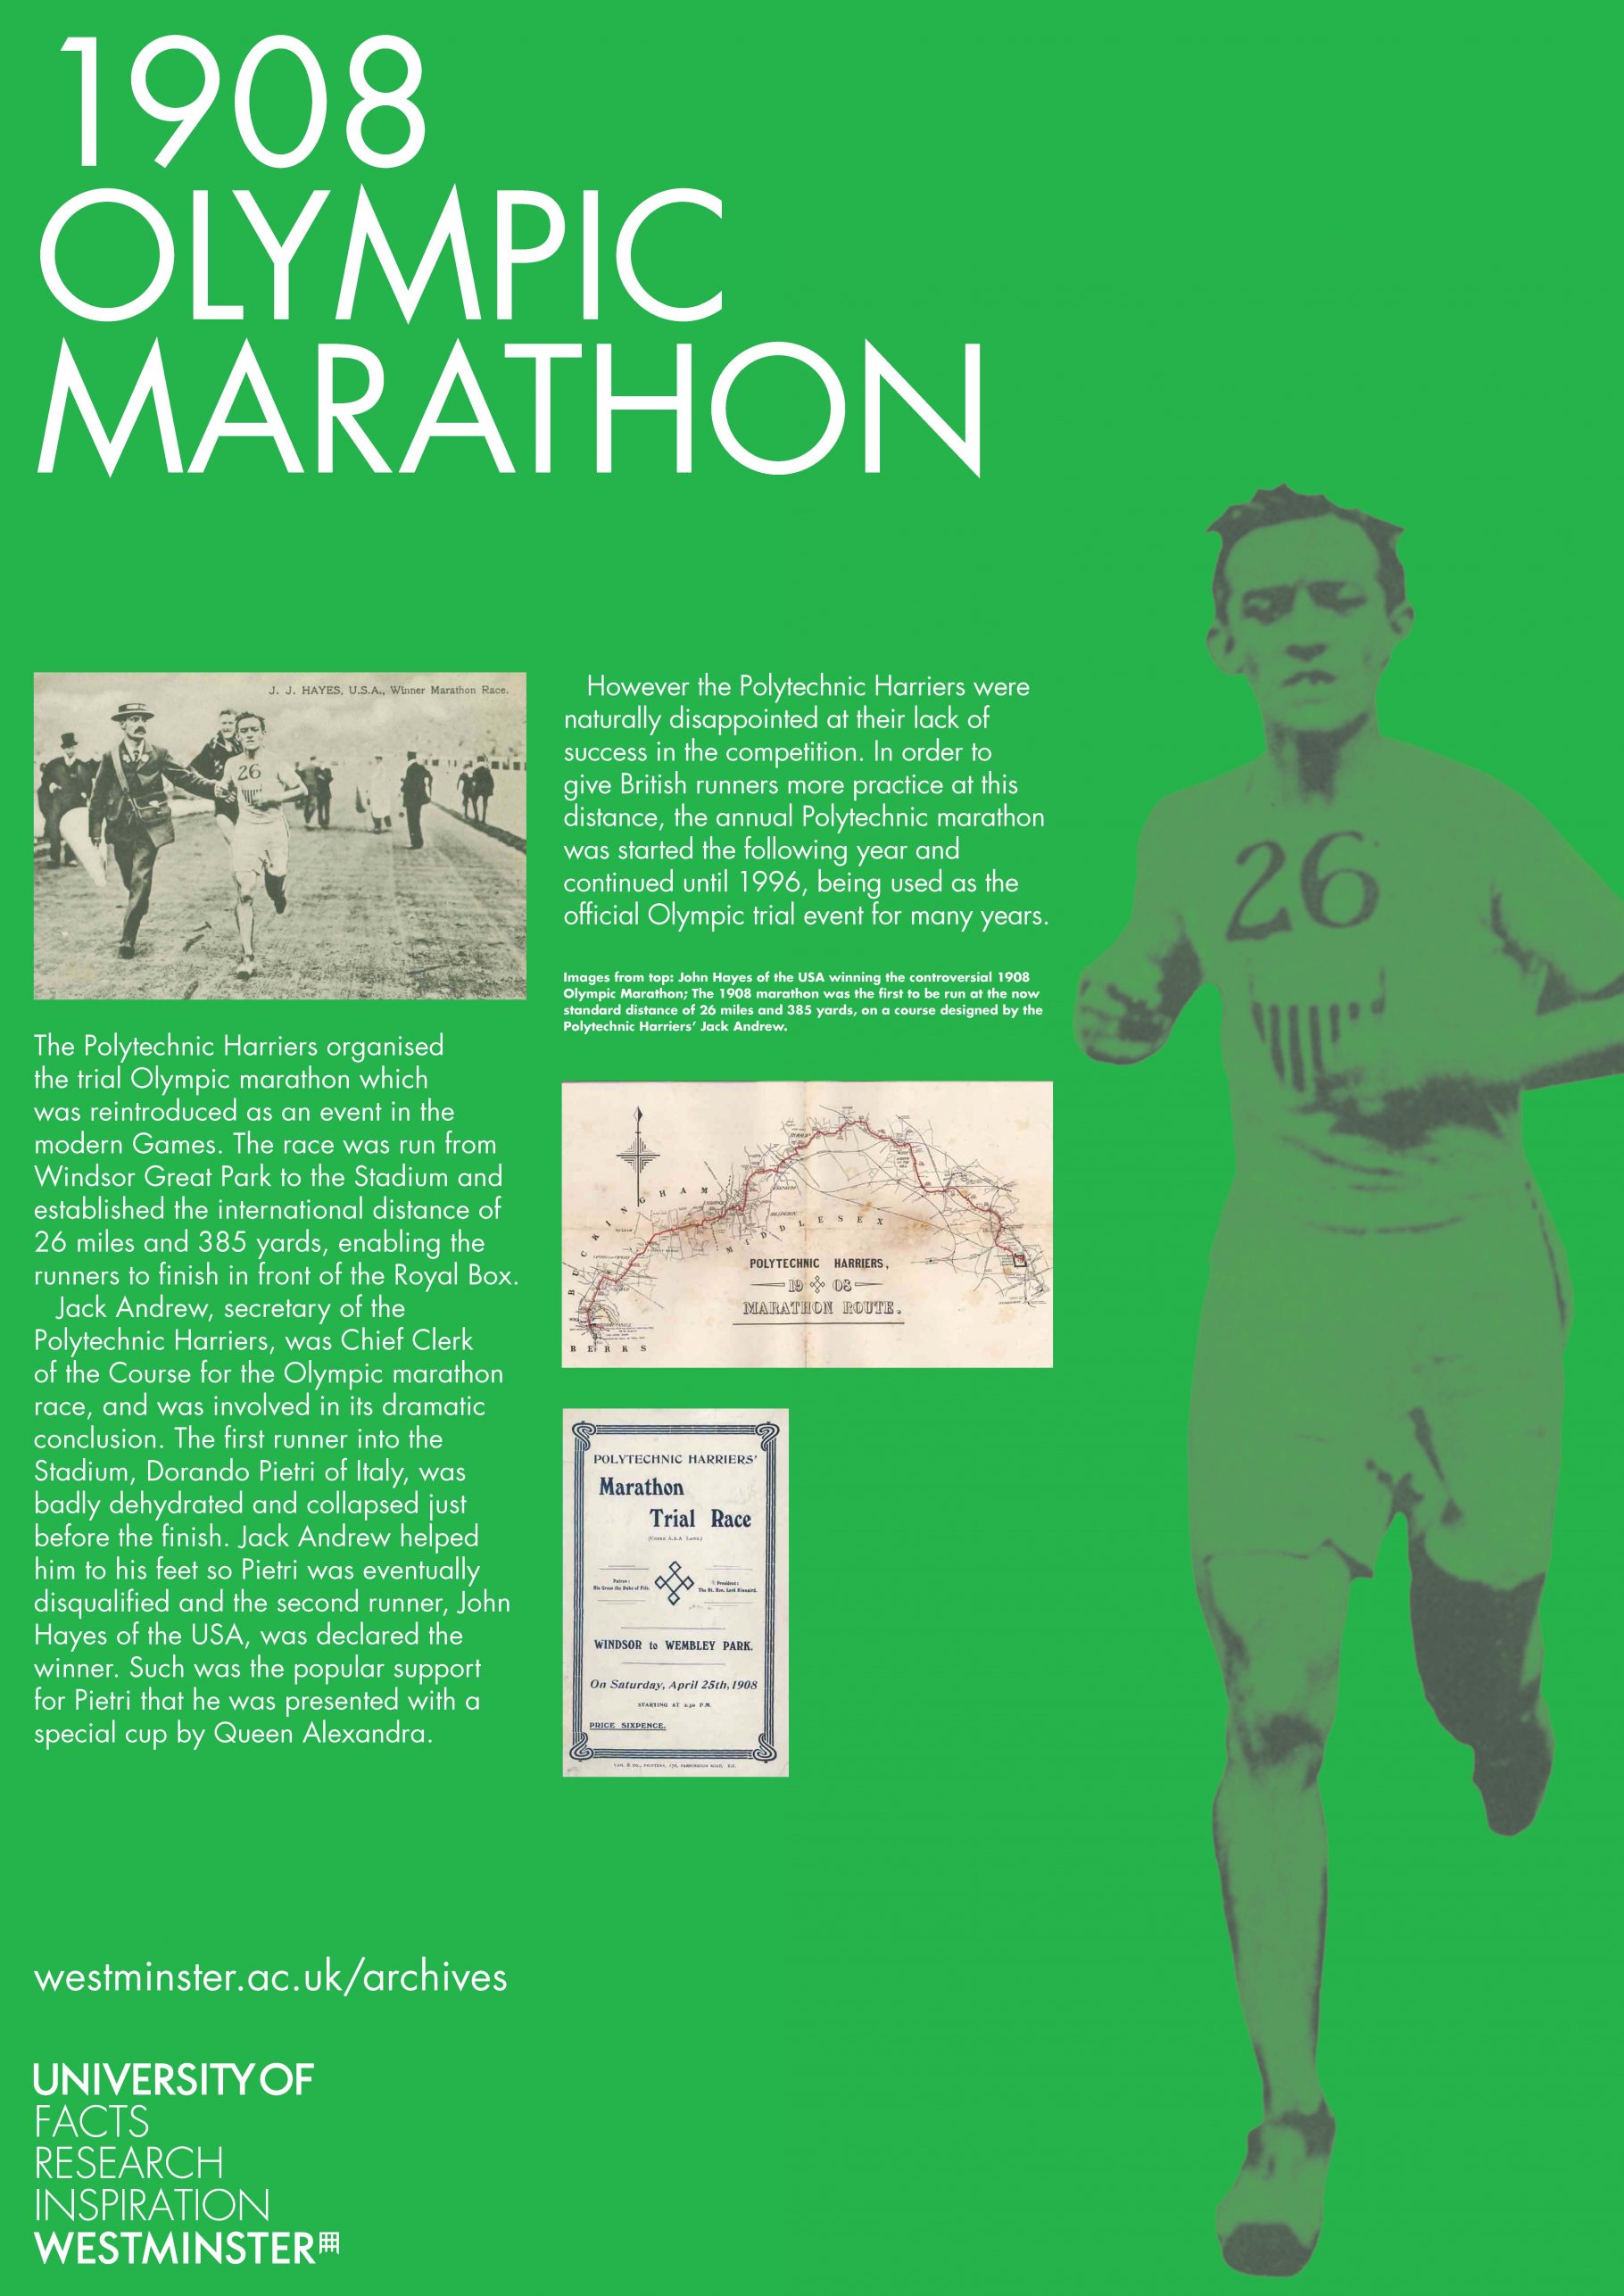 information poster on 1908 Olympic Marathon